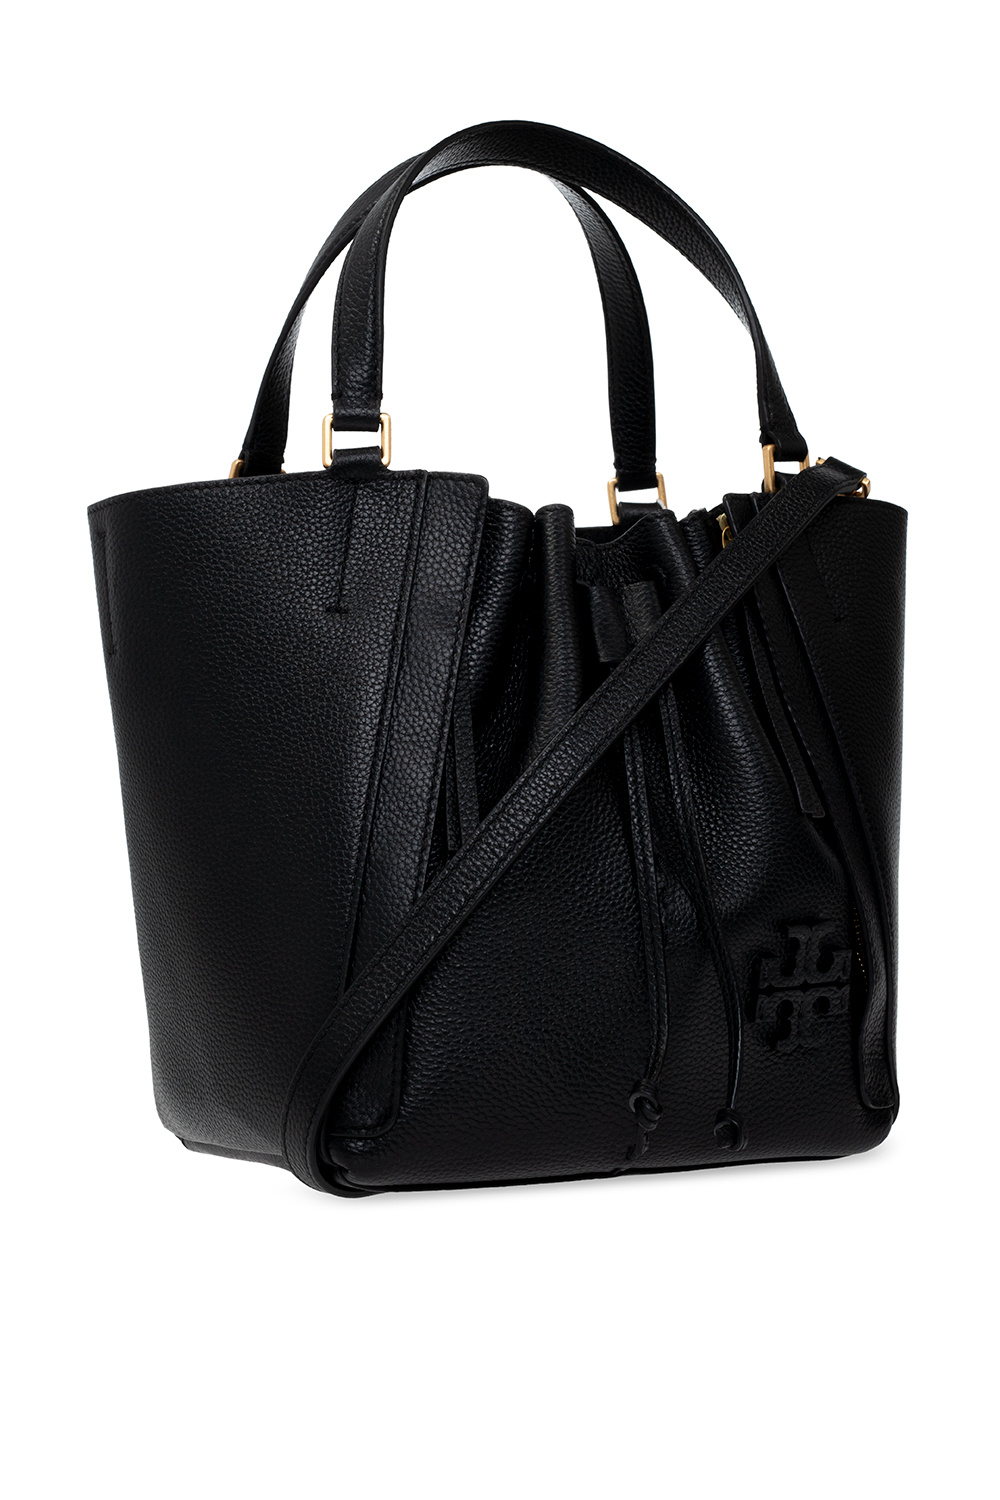 Black 'McGraw' shoulder bag Tory Burch - burberry logo print mini bag item  - IetpShops Australia